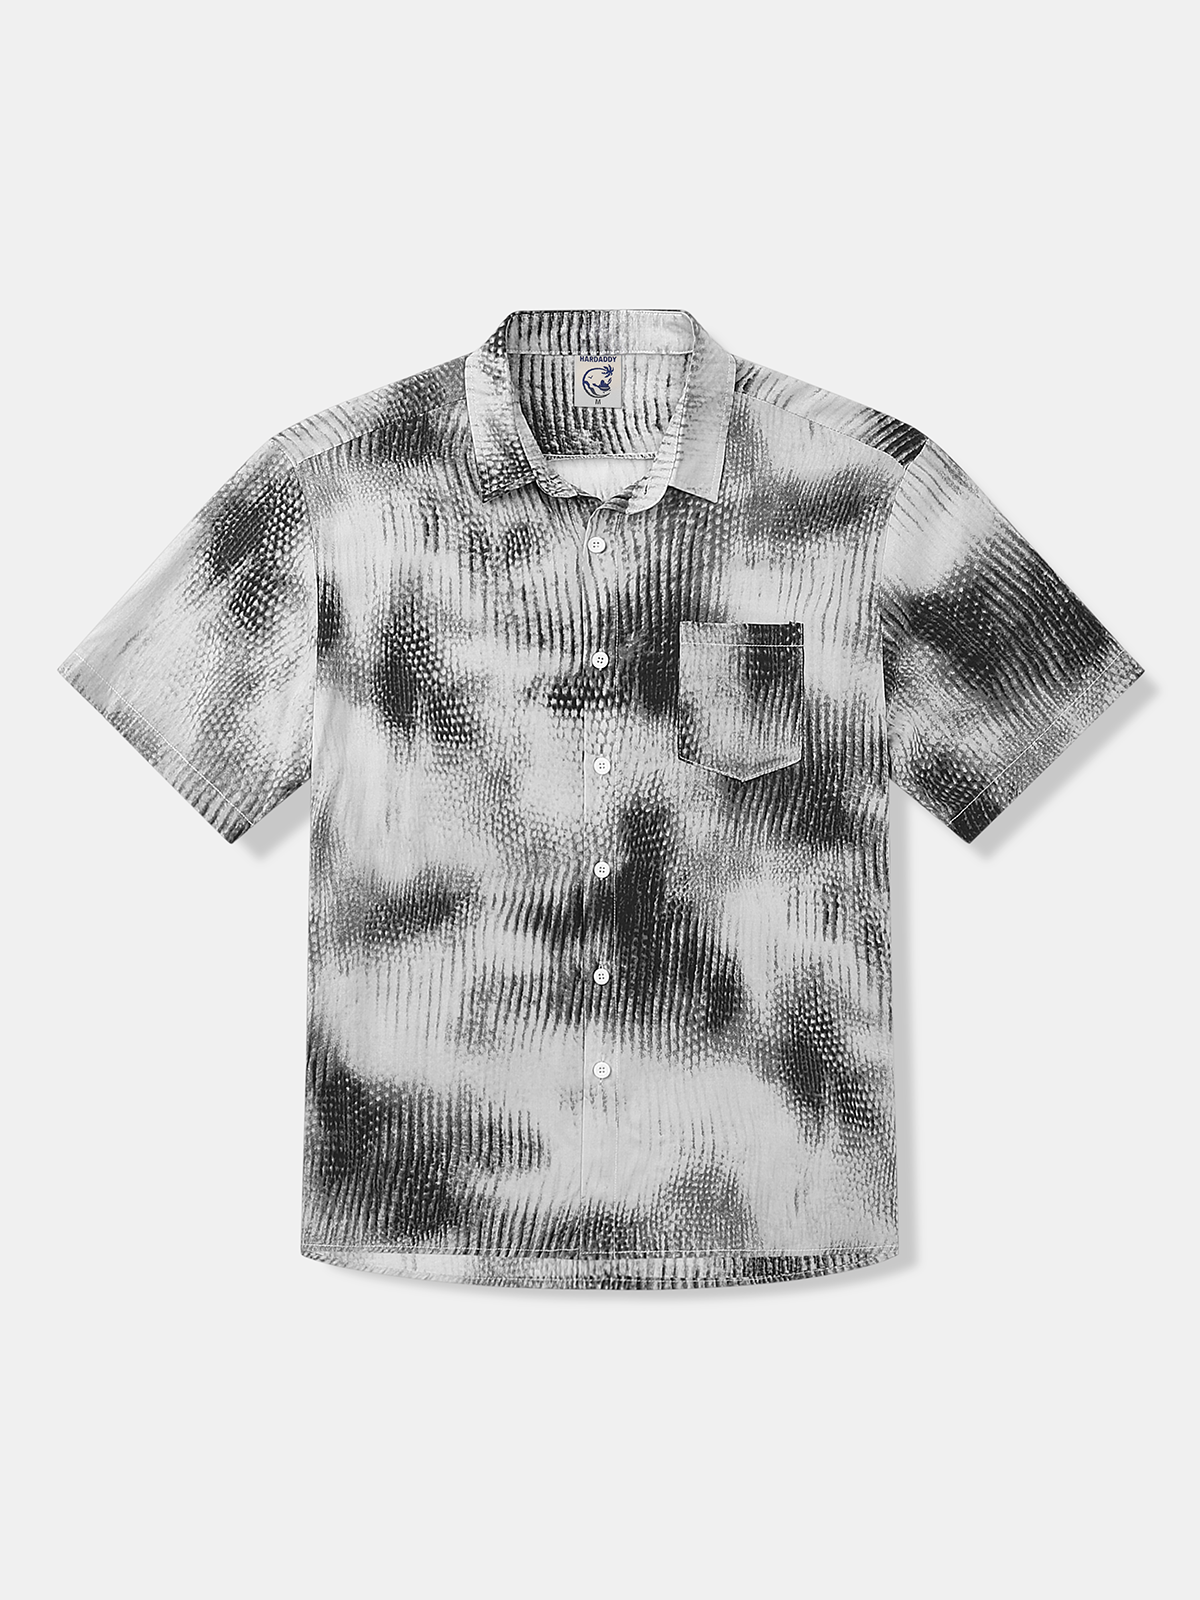 Hardaddy Abstract Pattern Casual Aloha Shirt